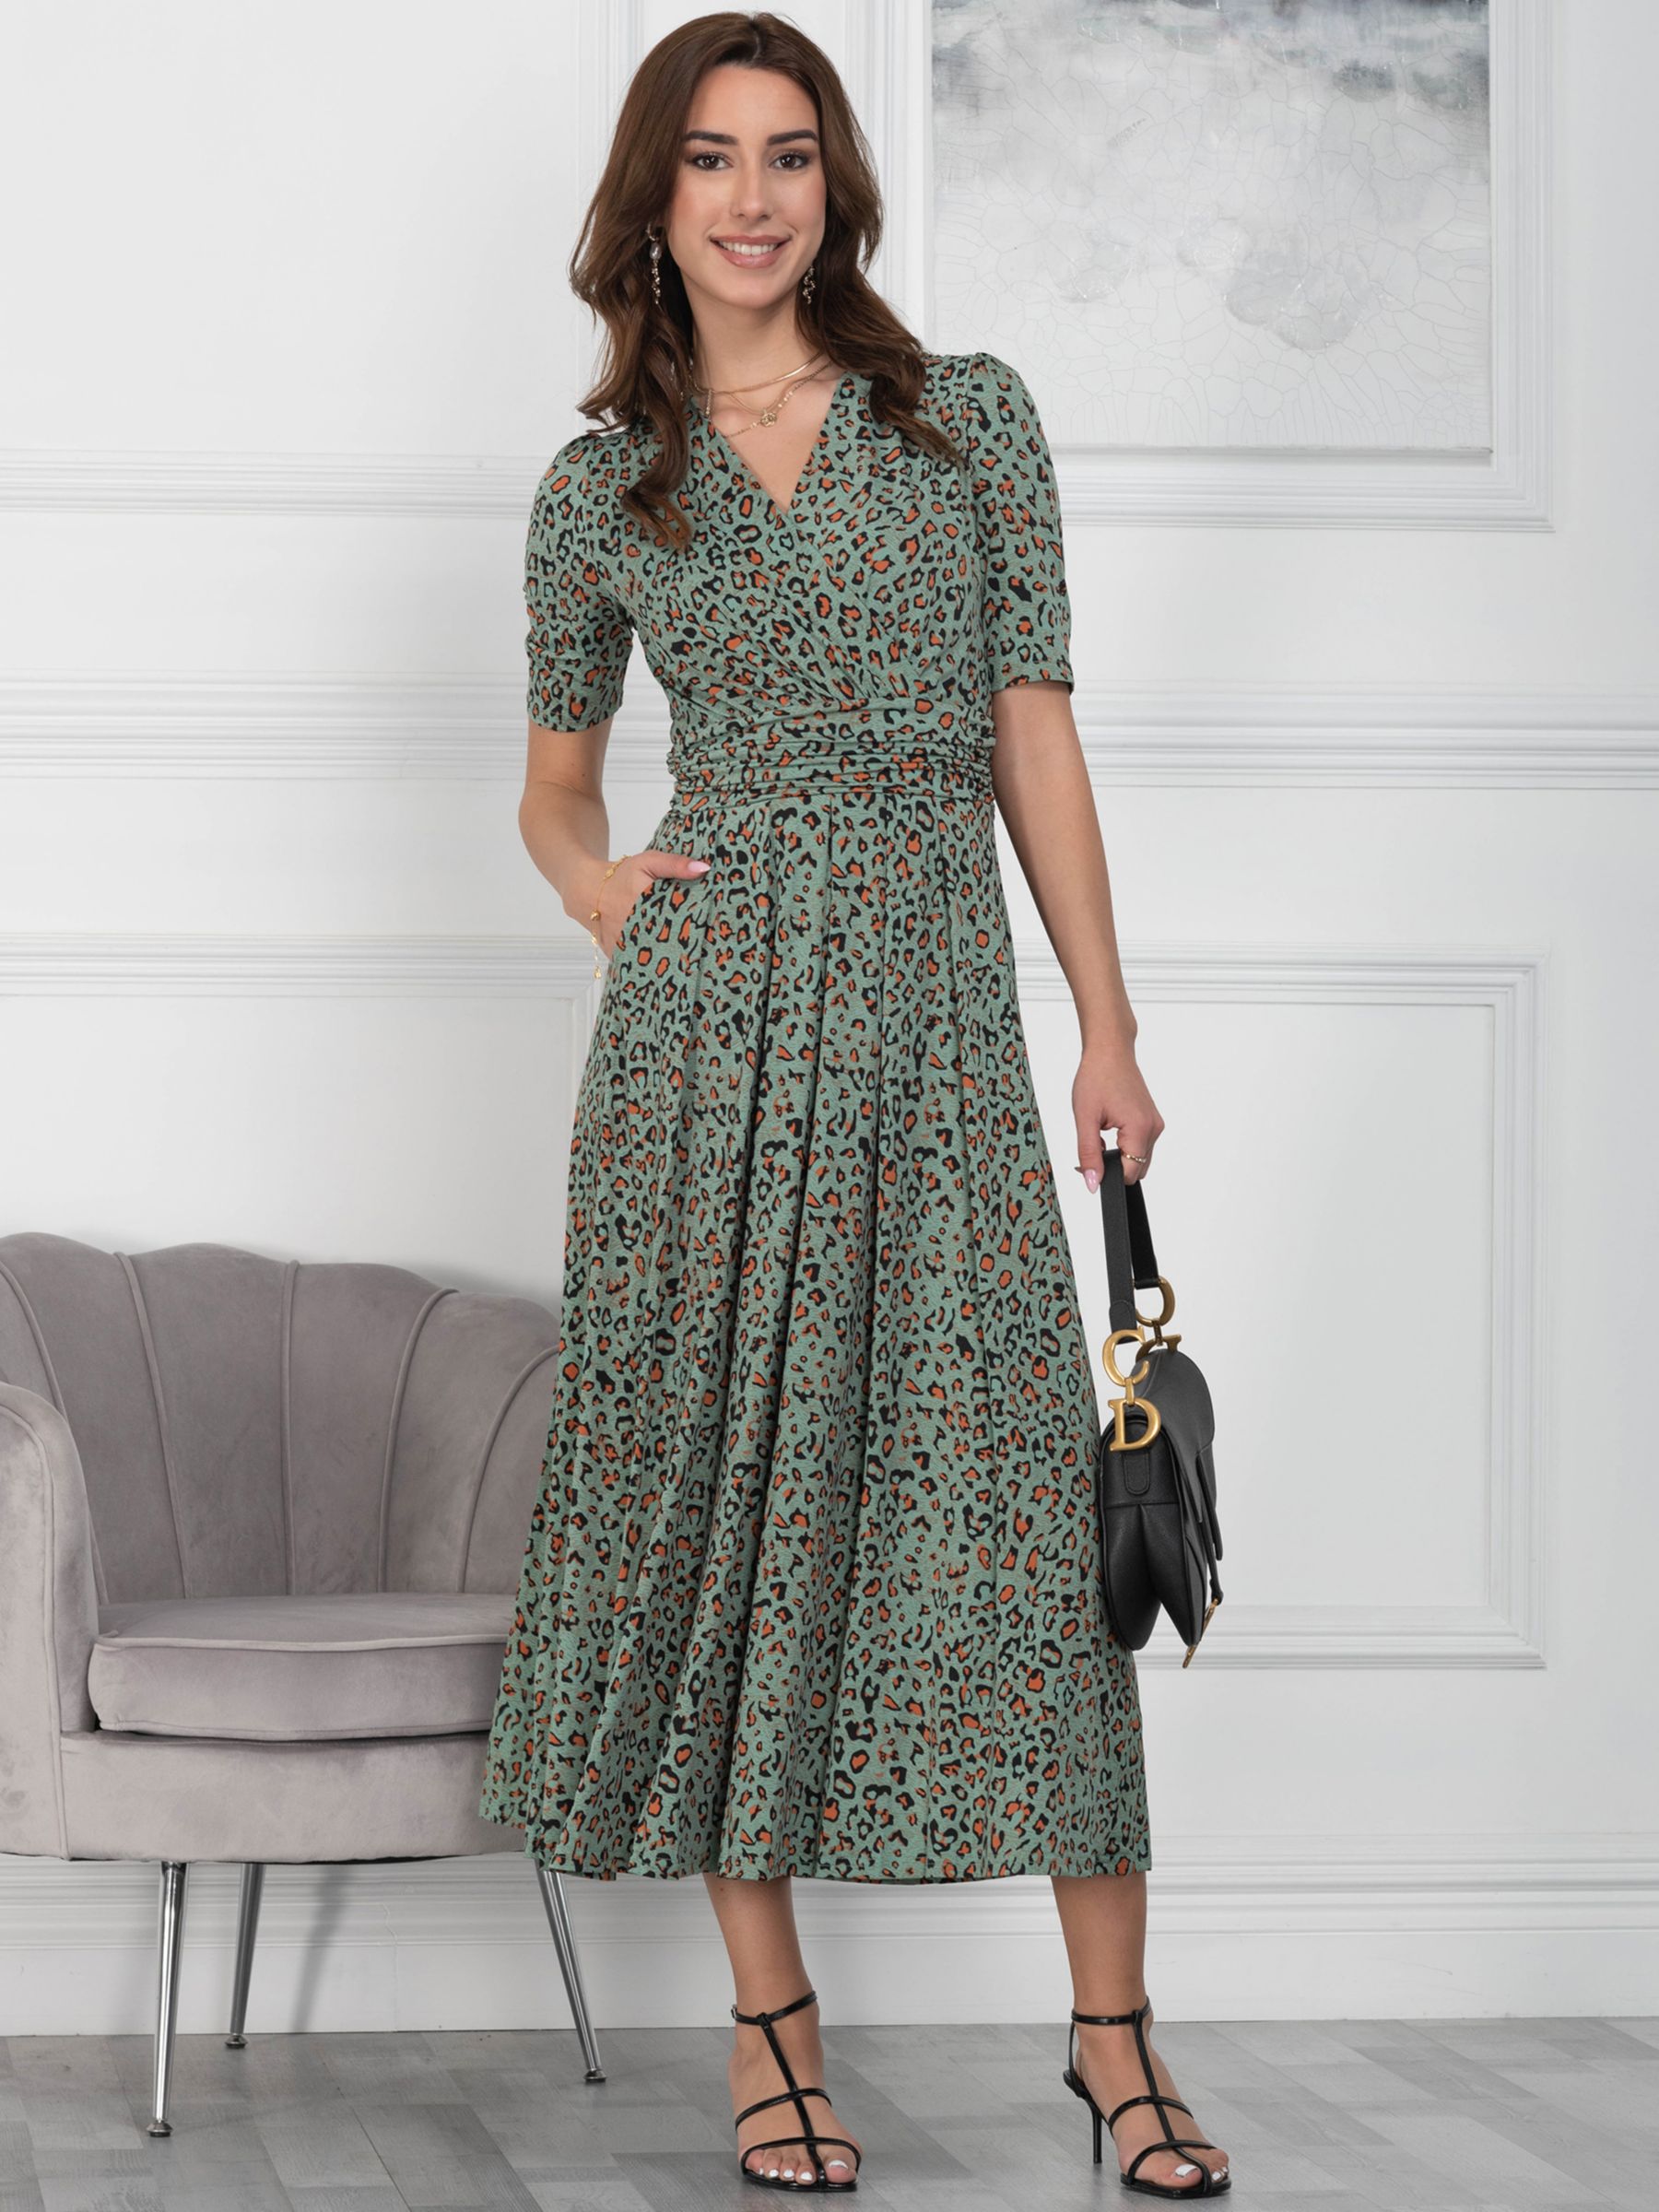 Jolie Moi Coleen Leopard Print Maxi Dress, Green/Multi at John Lewis ...